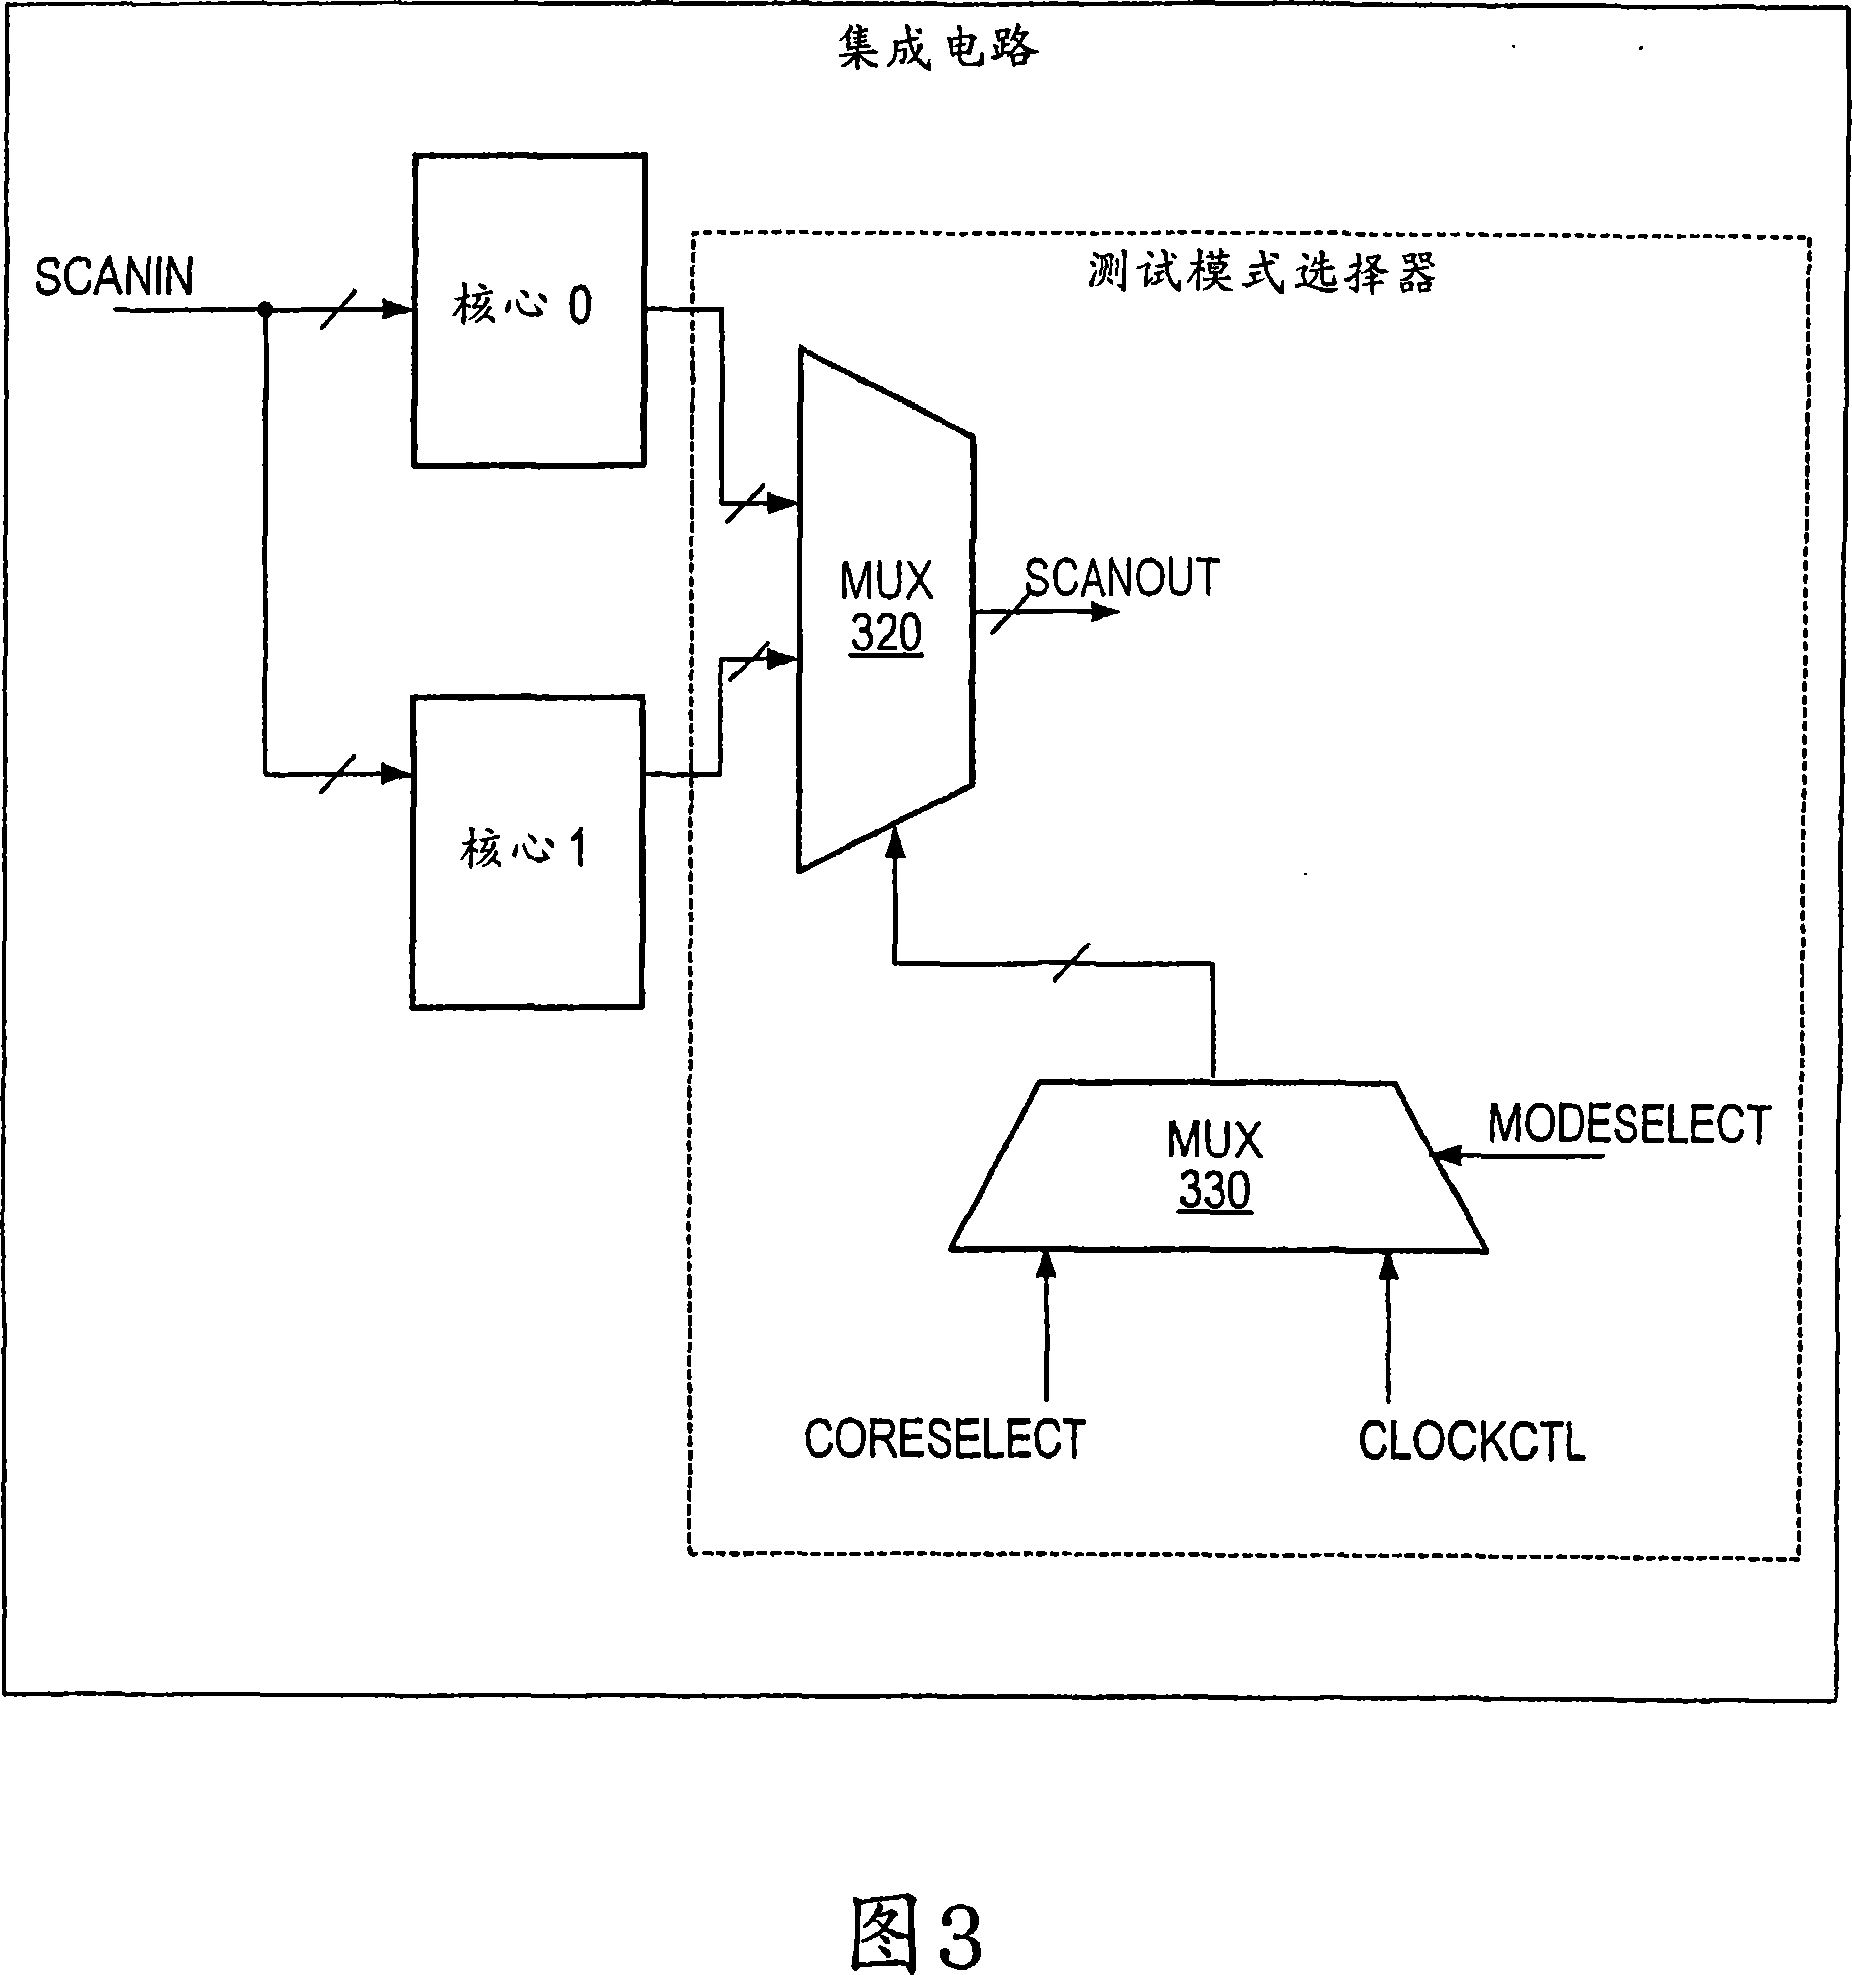 Simultaneous core testing in multi-core integrated circuits